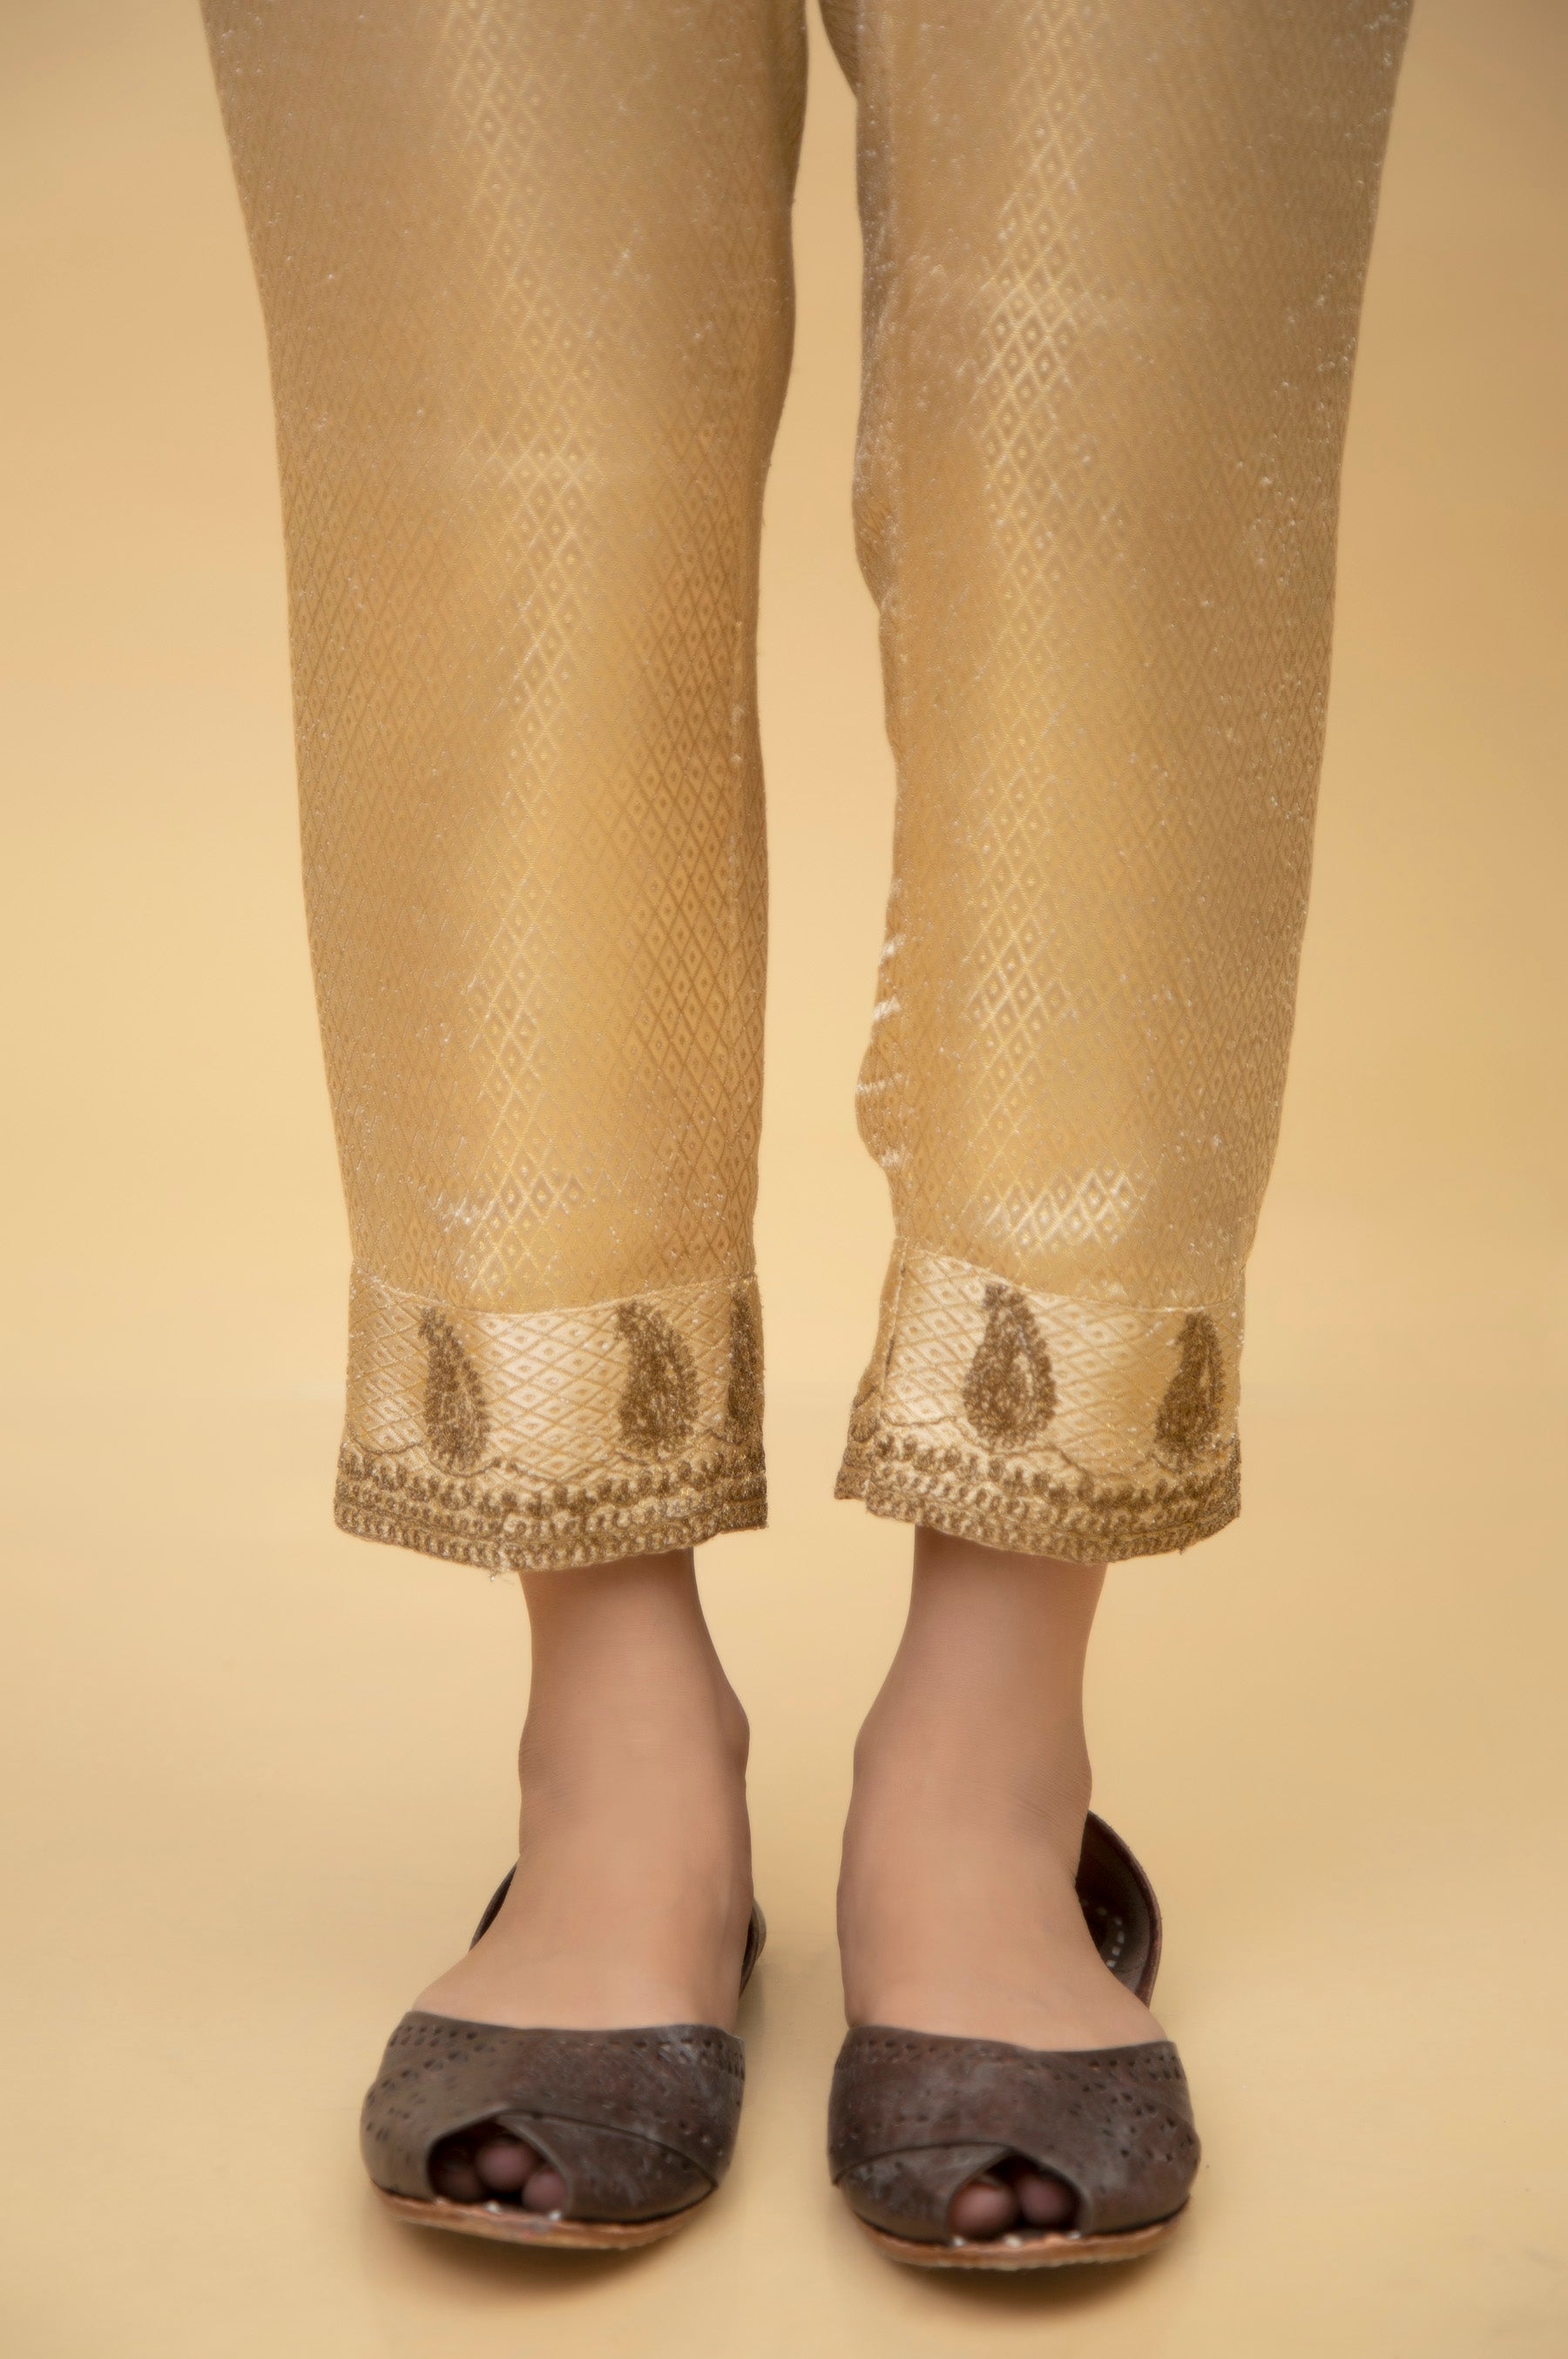 11 Pencil pants ideas  salwar designs salwar pants designs for dresses